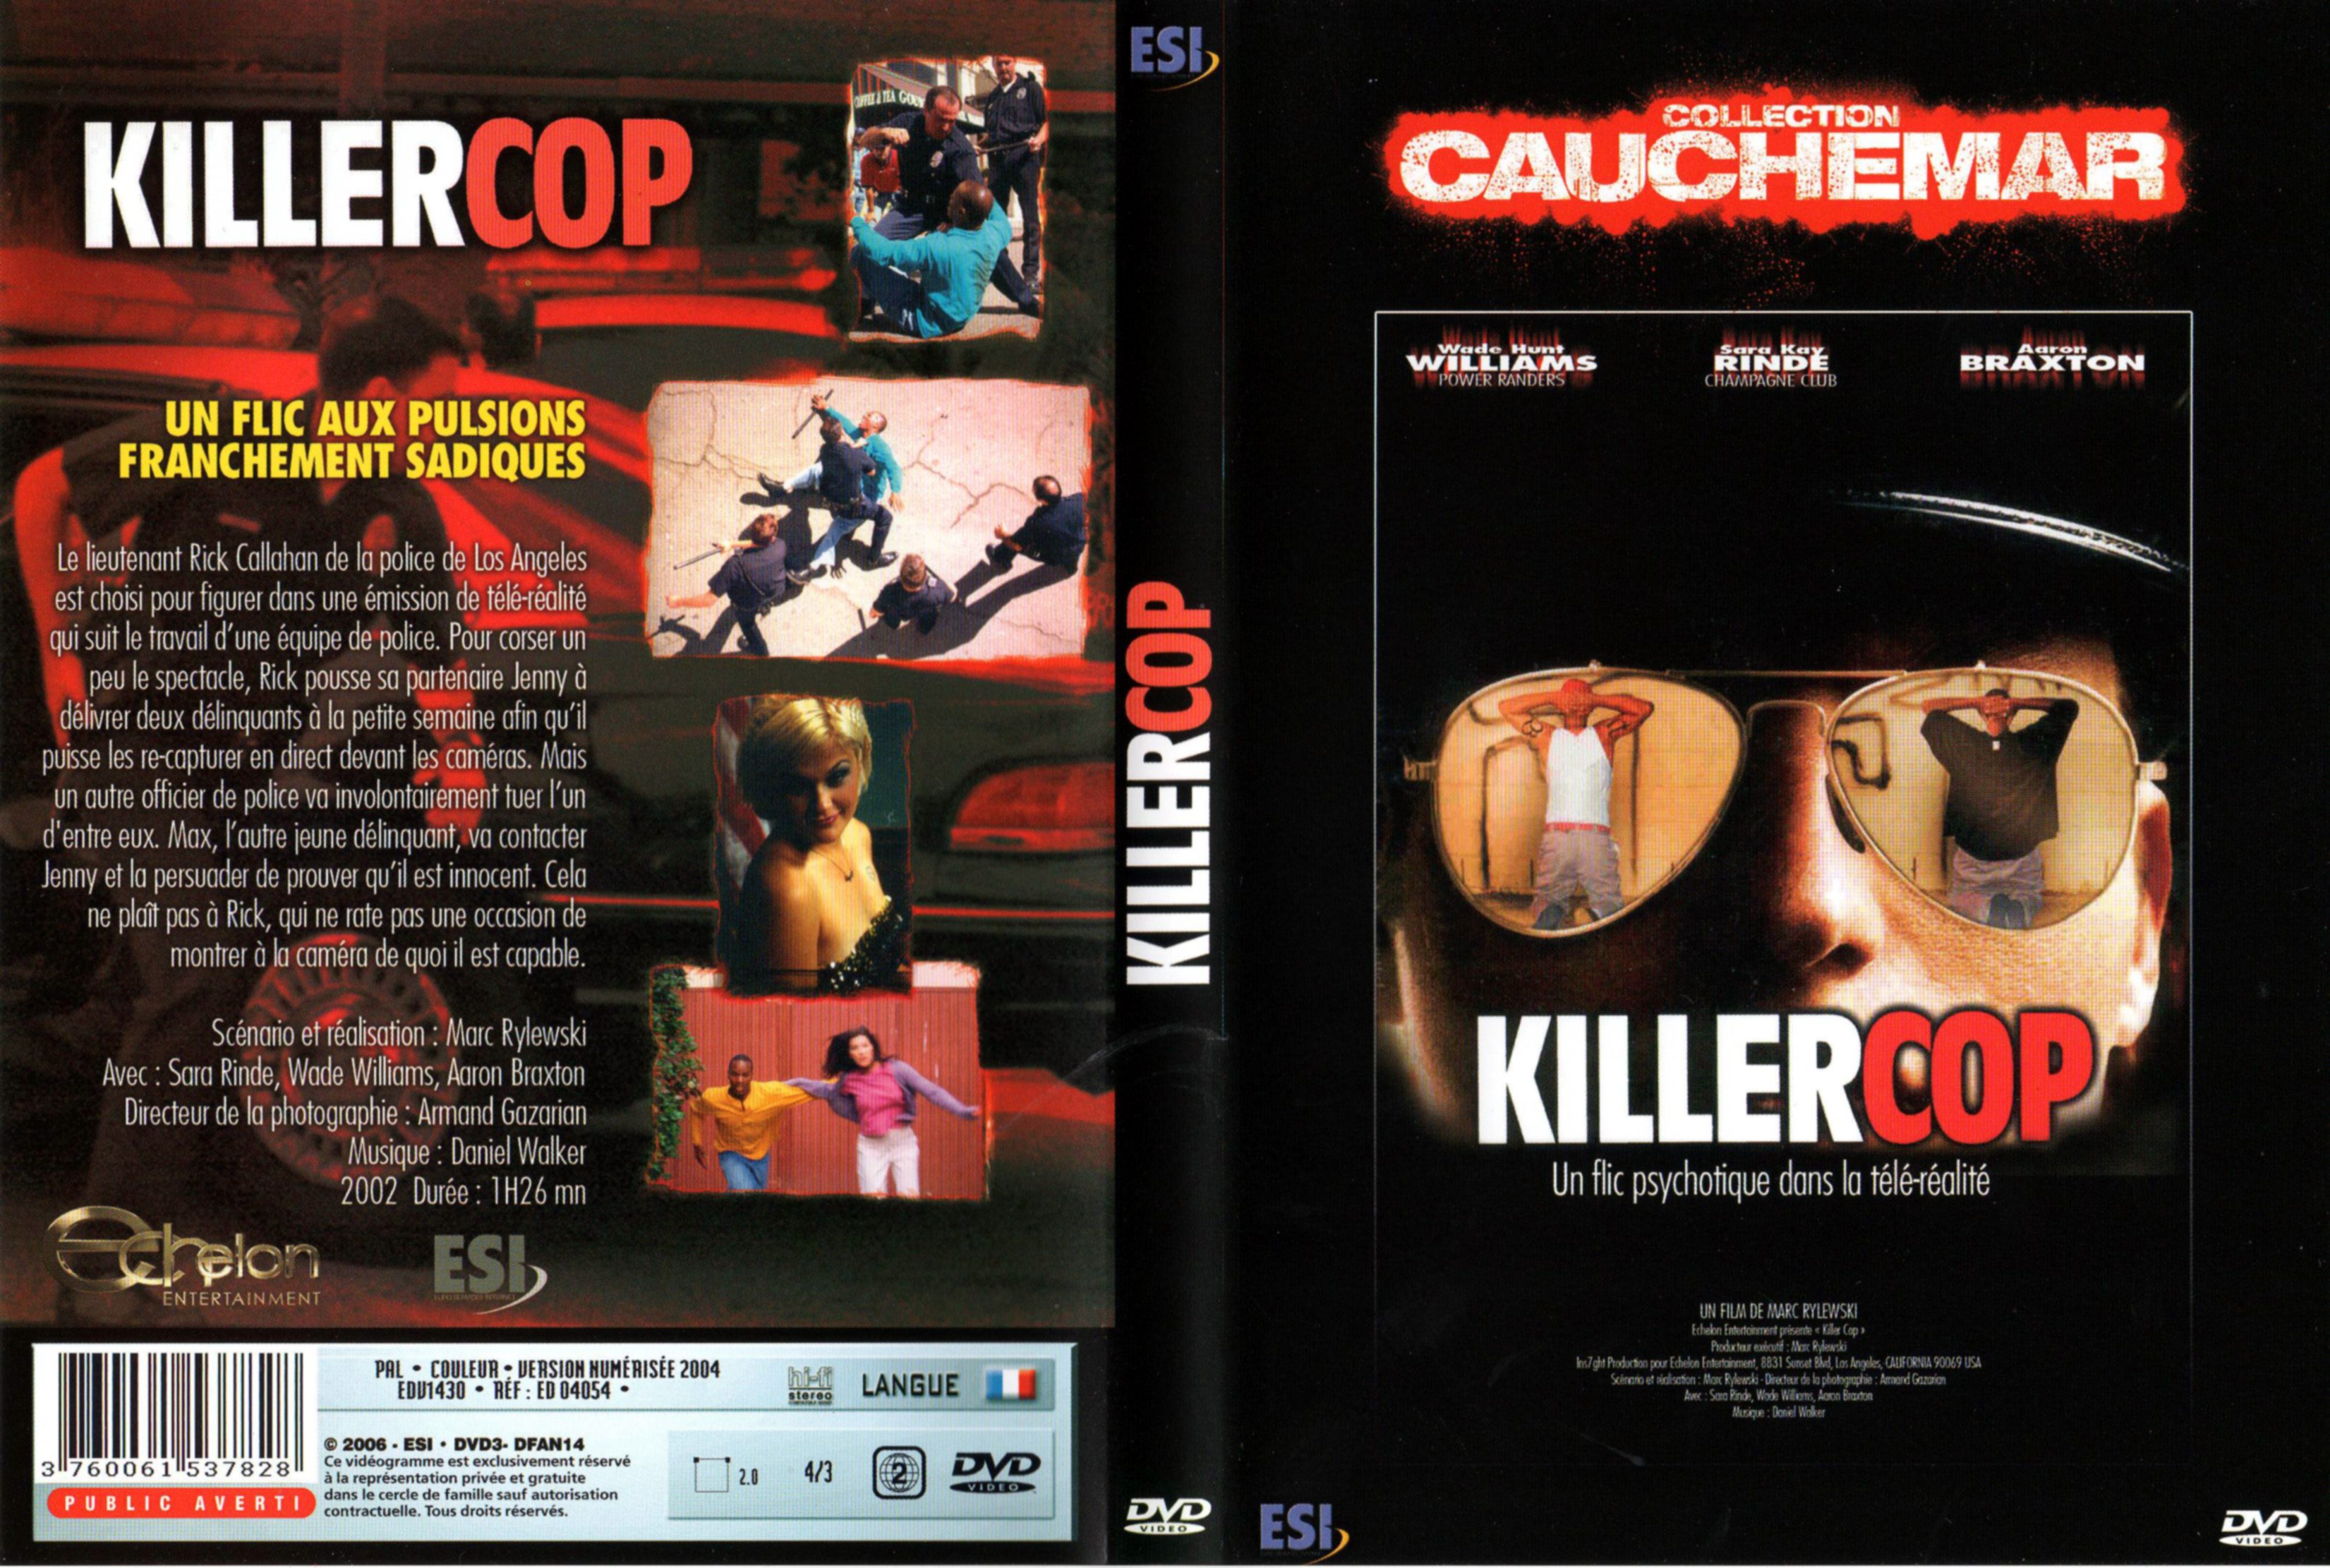 Jaquette DVD Killer cop